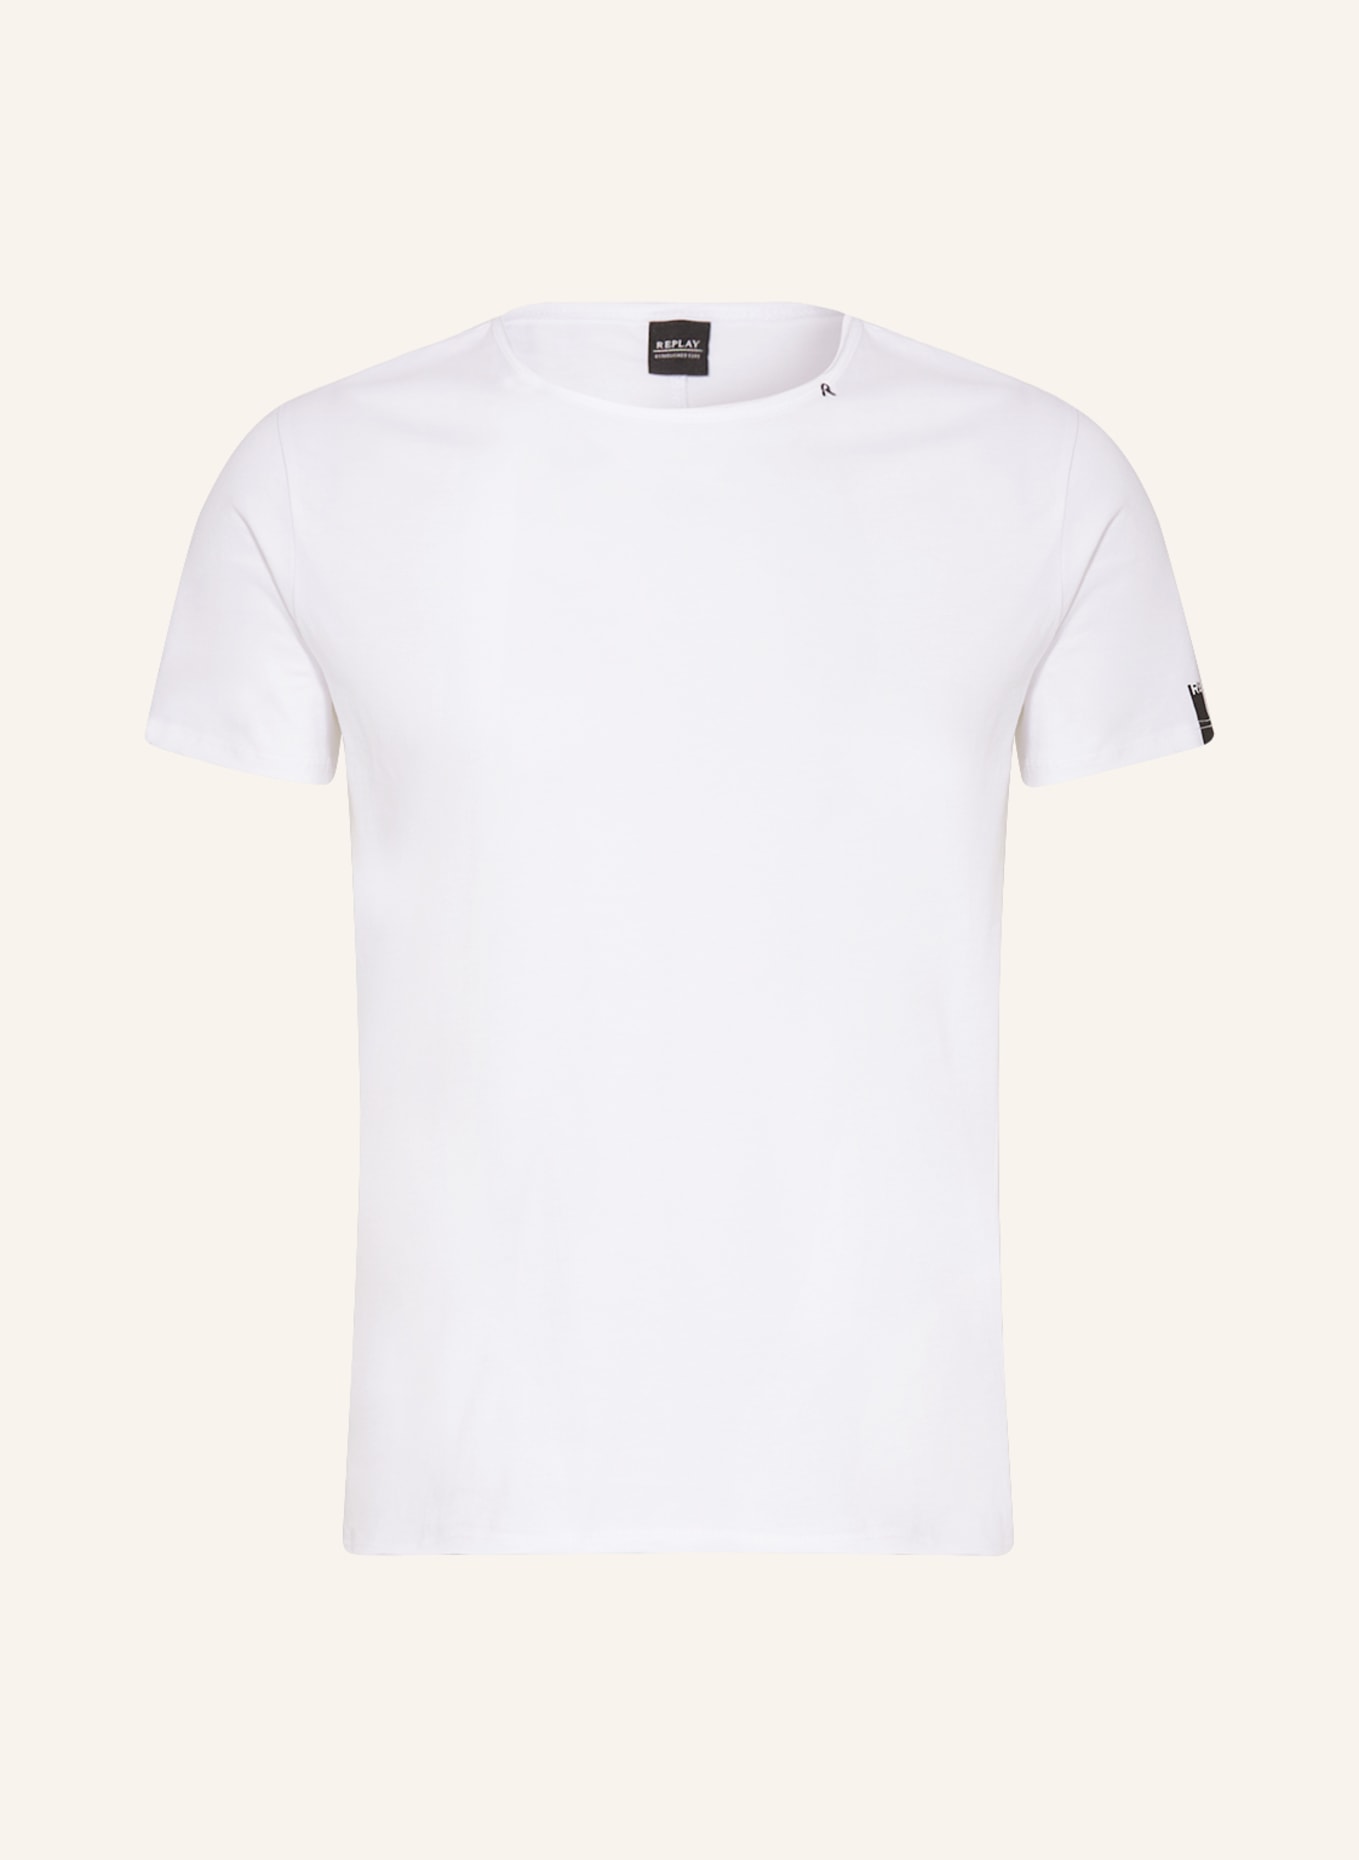 white T-shirt in REPLAY